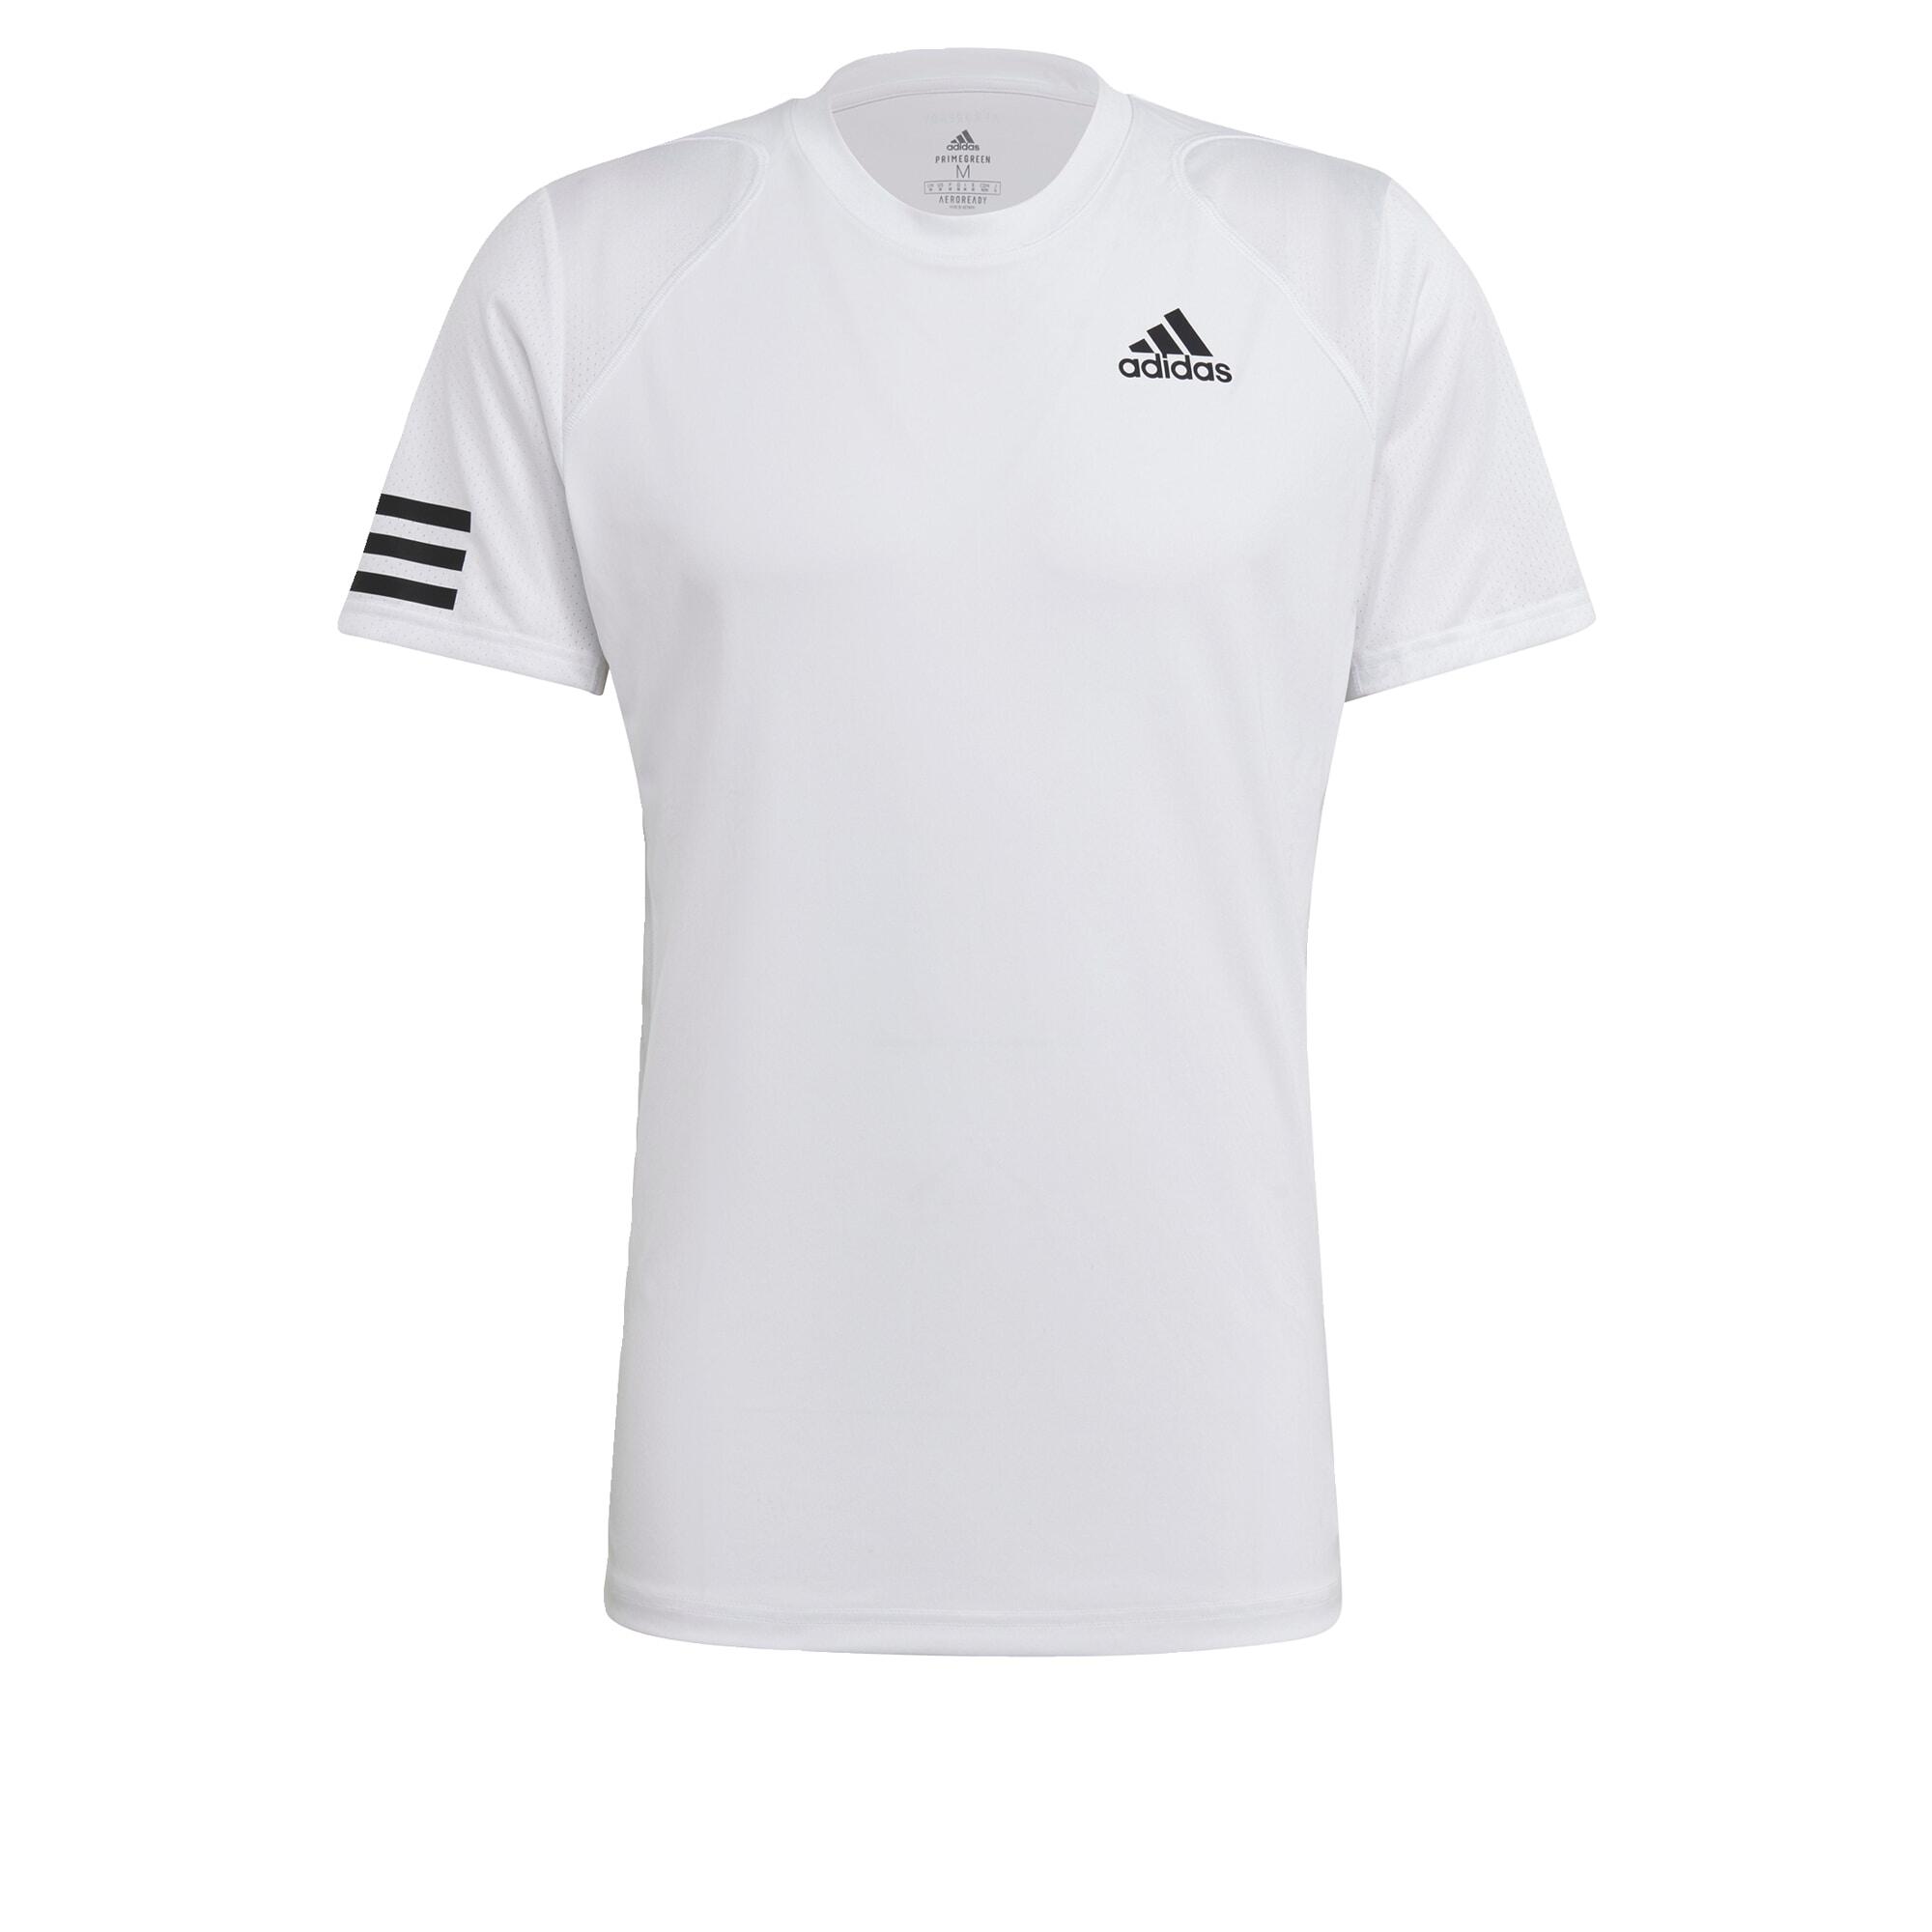 Tee shirt Adidas homme pas cher | Decathlon